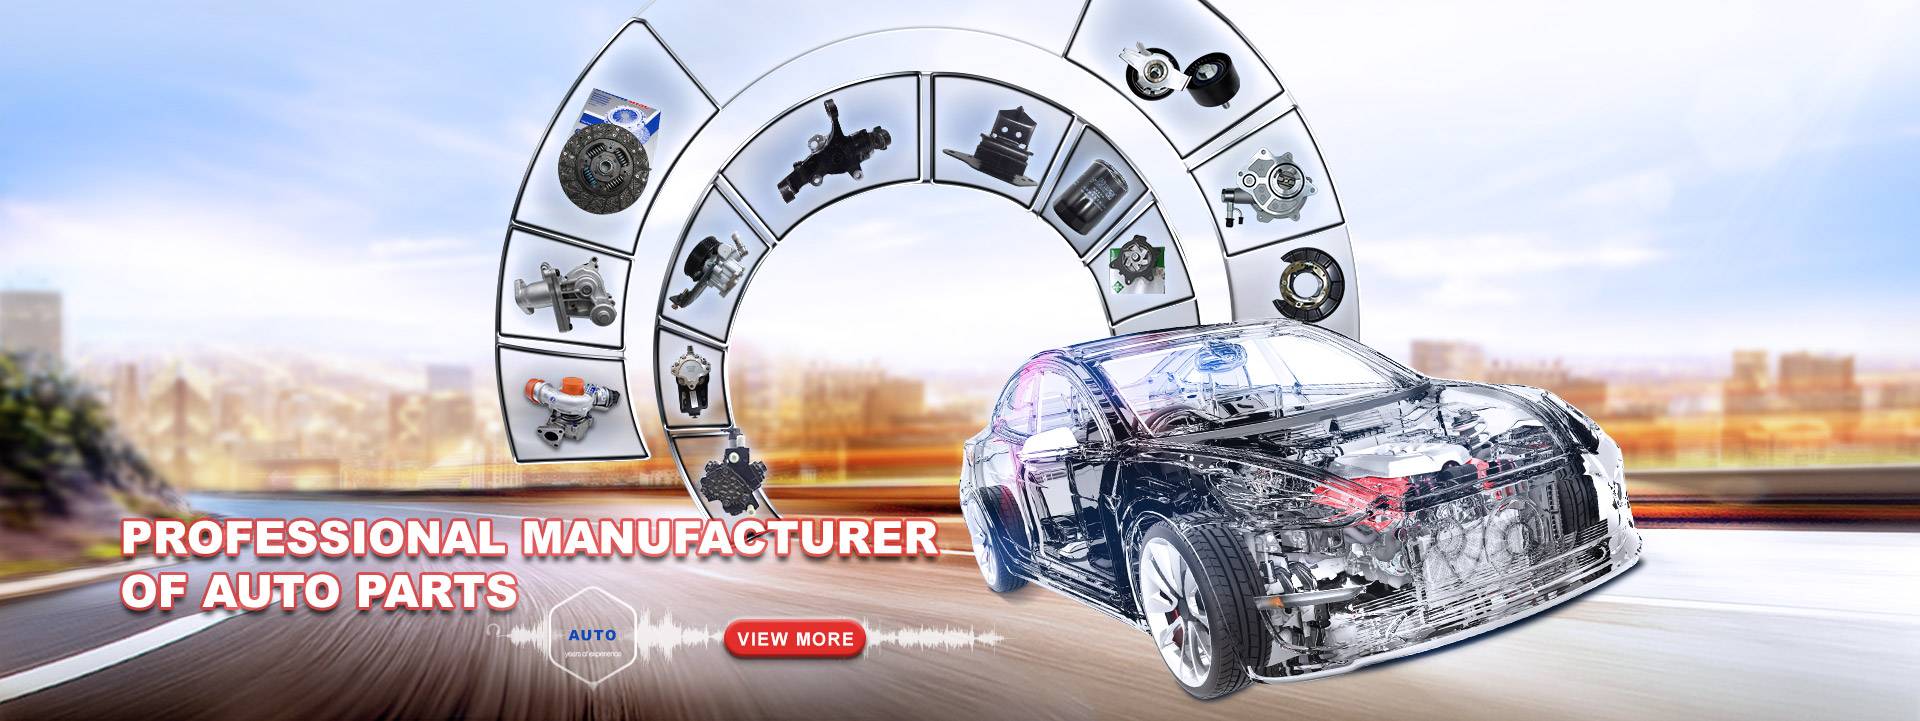 Professional manufacturer of auto parts